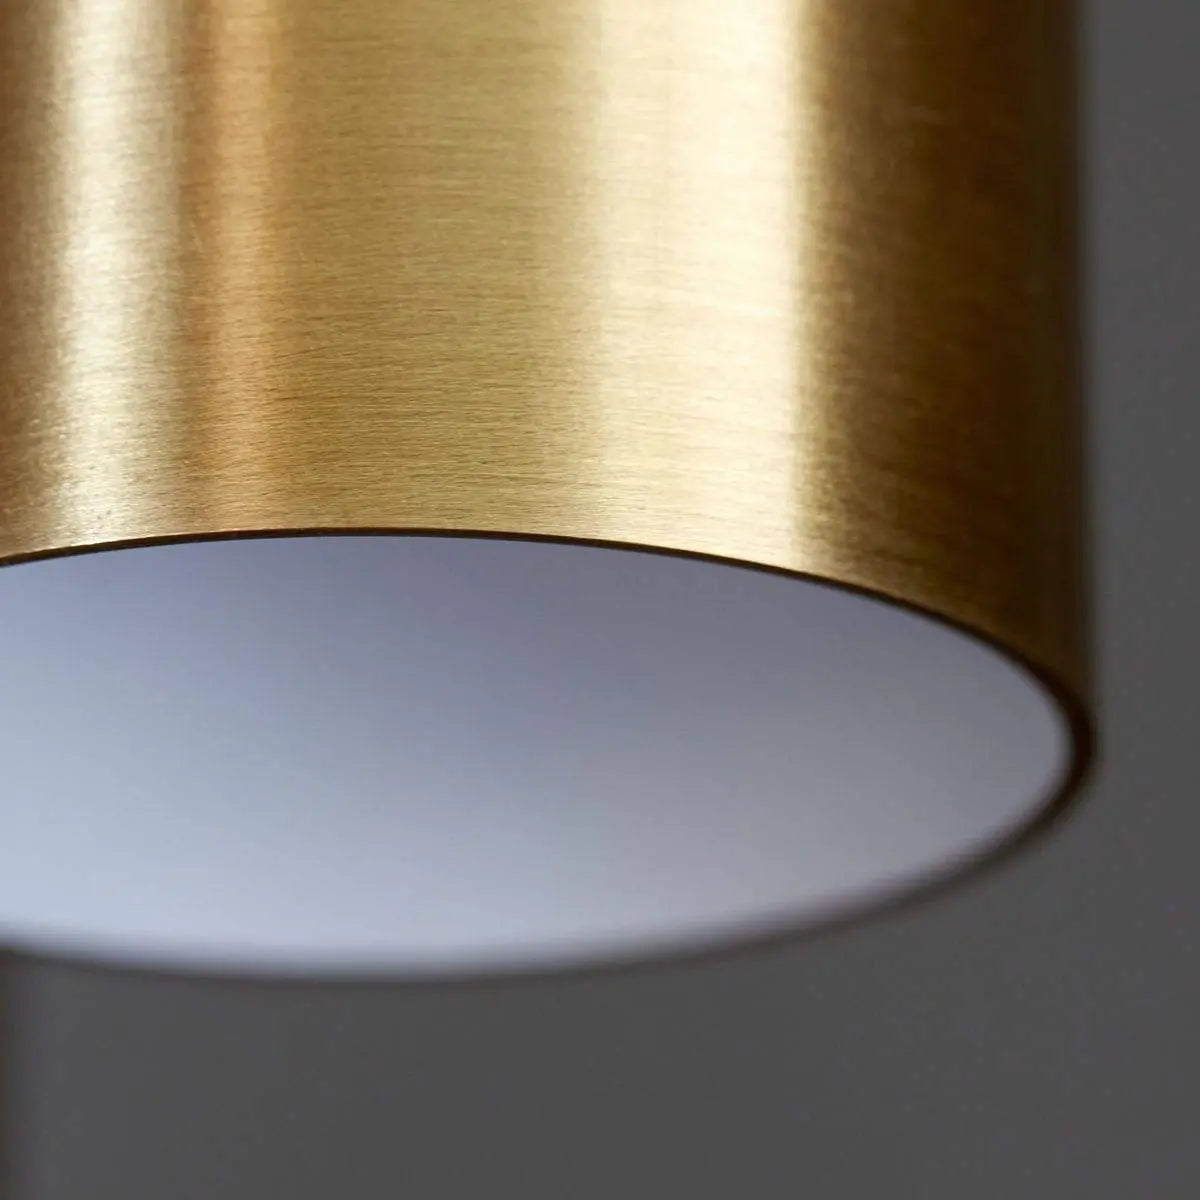 Society of Lifestyle Pendant Lighting Brass Pin Light Fixture (Large)